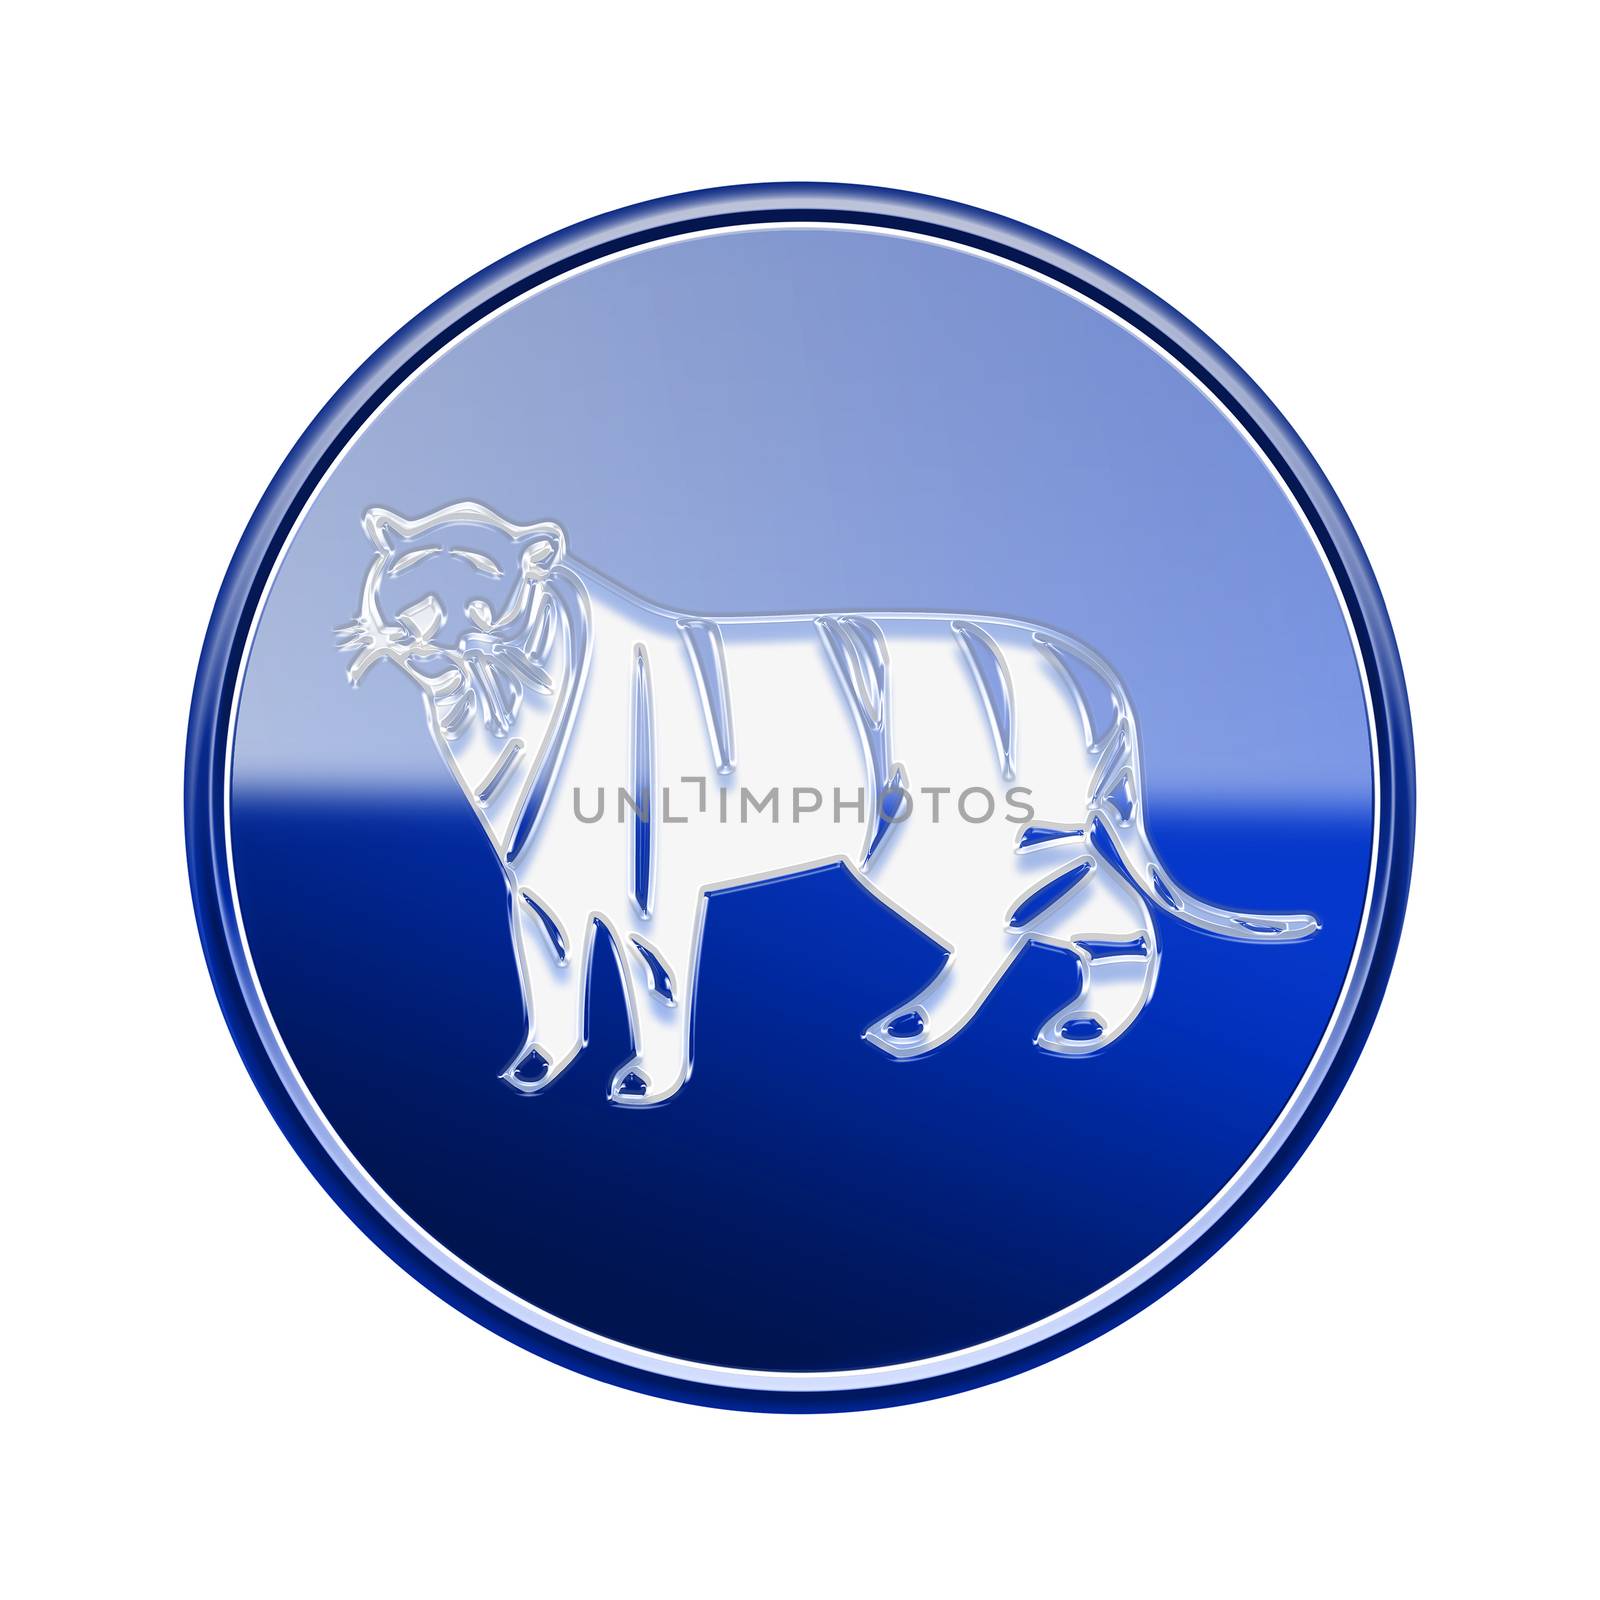 Tiger Zodiac icon blue, isolated on white background.